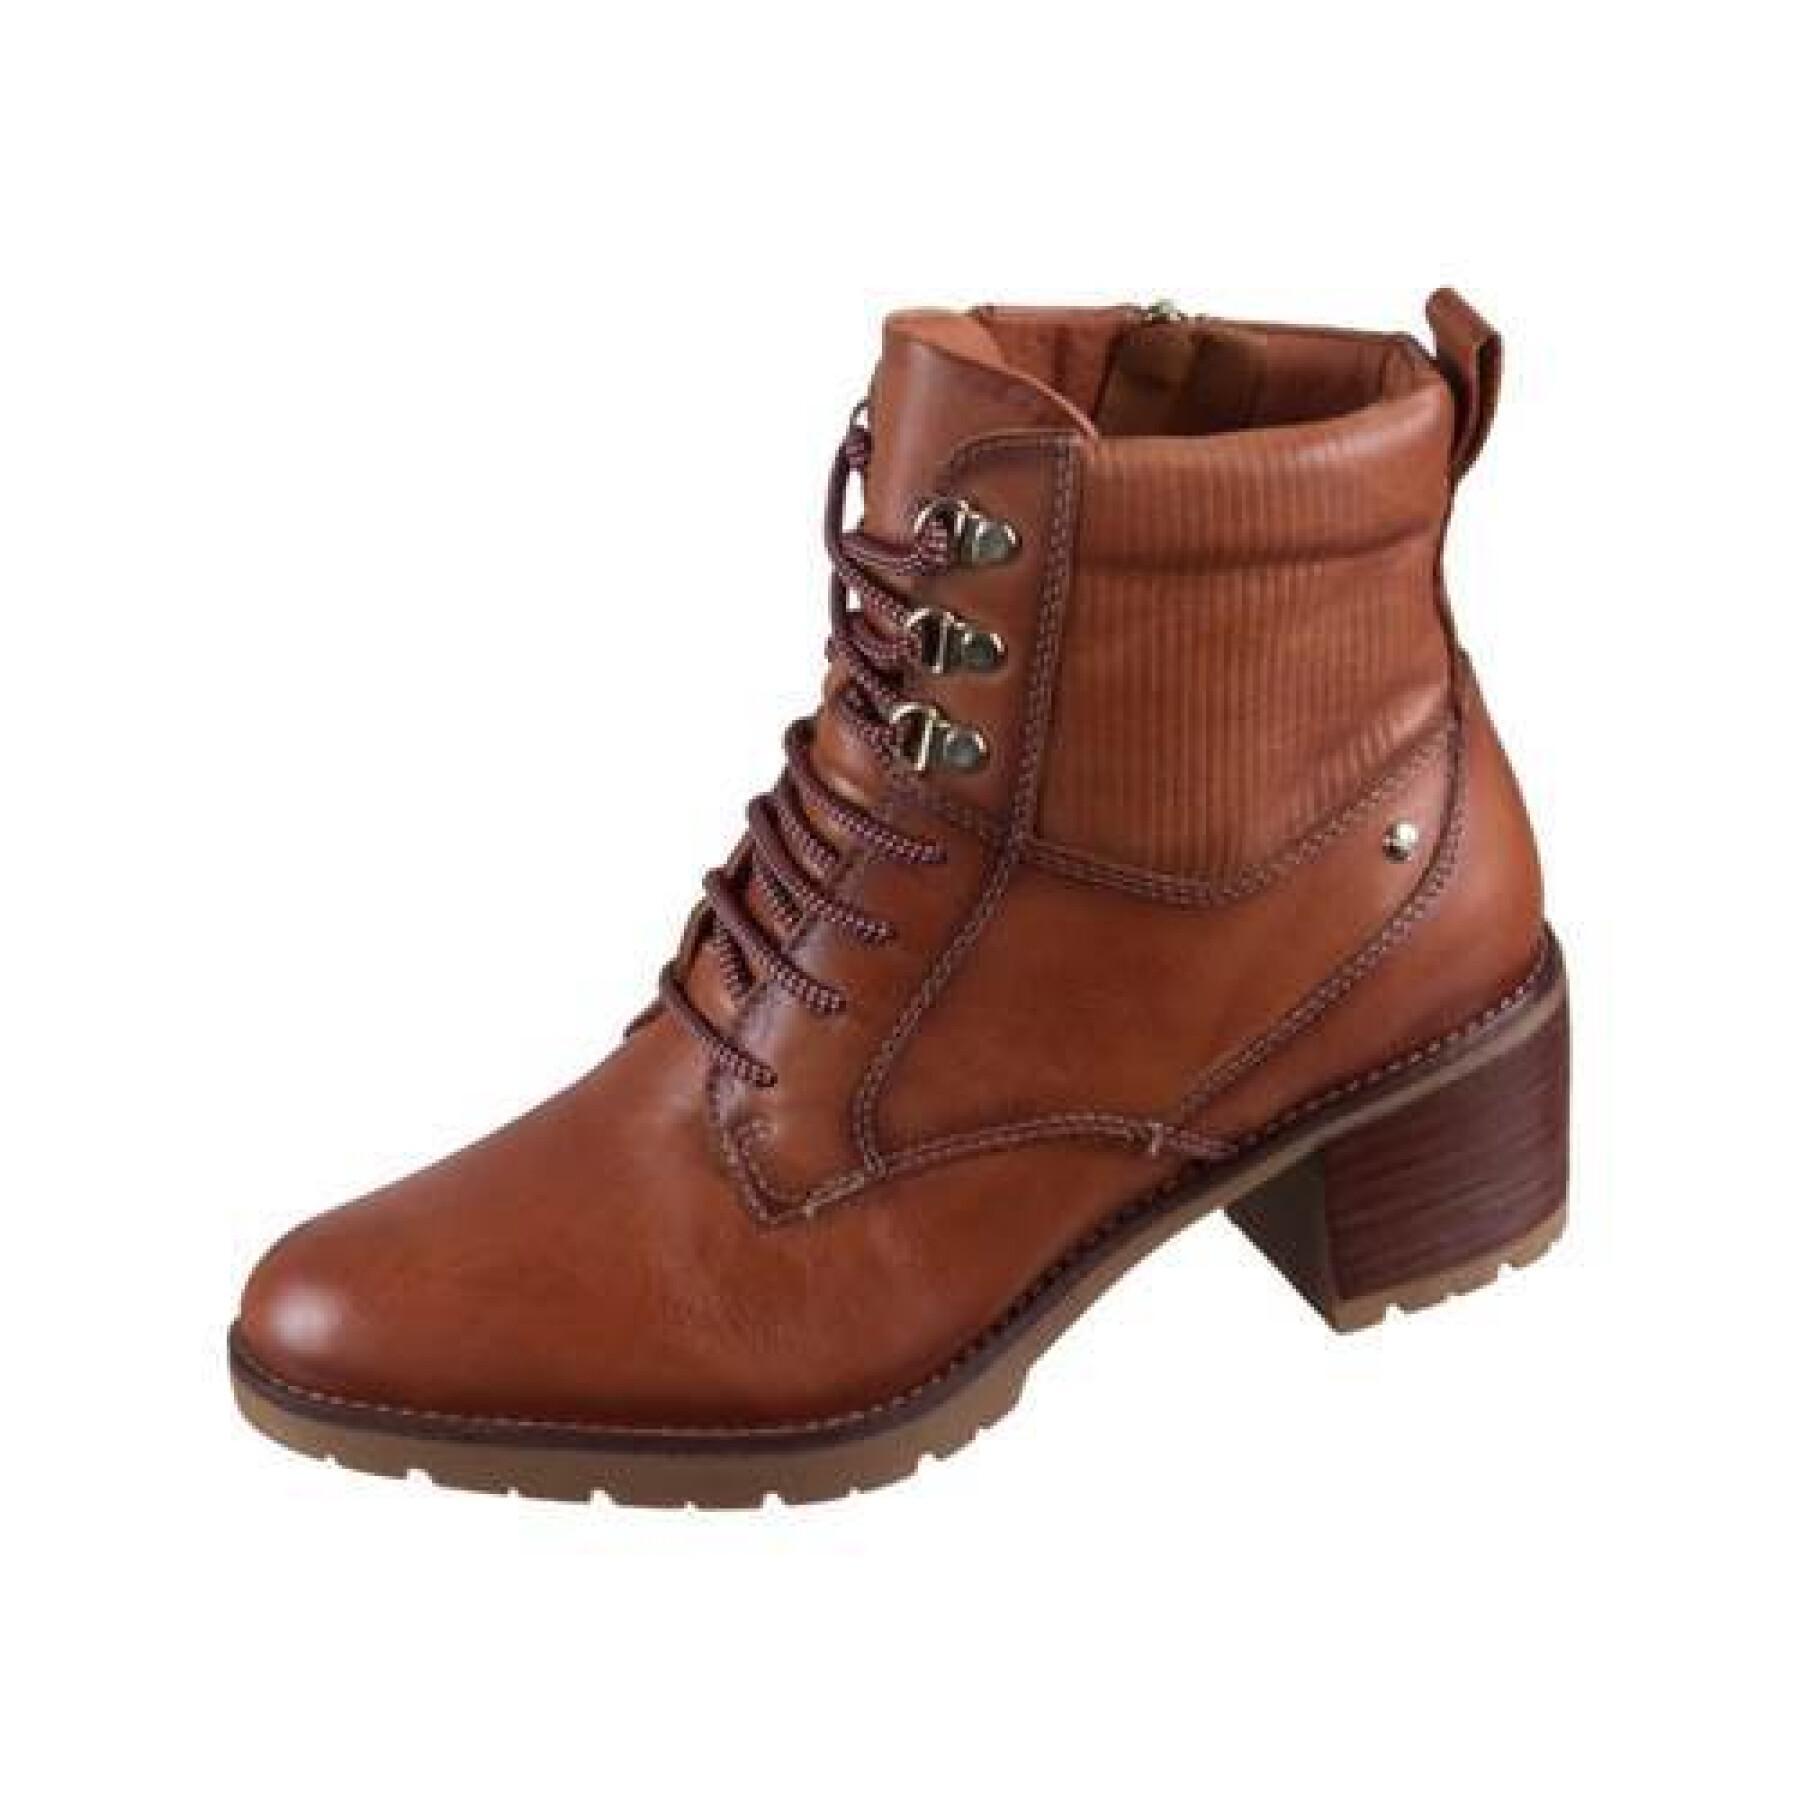 Women's boots Pikolinos Llanes W7H-8938